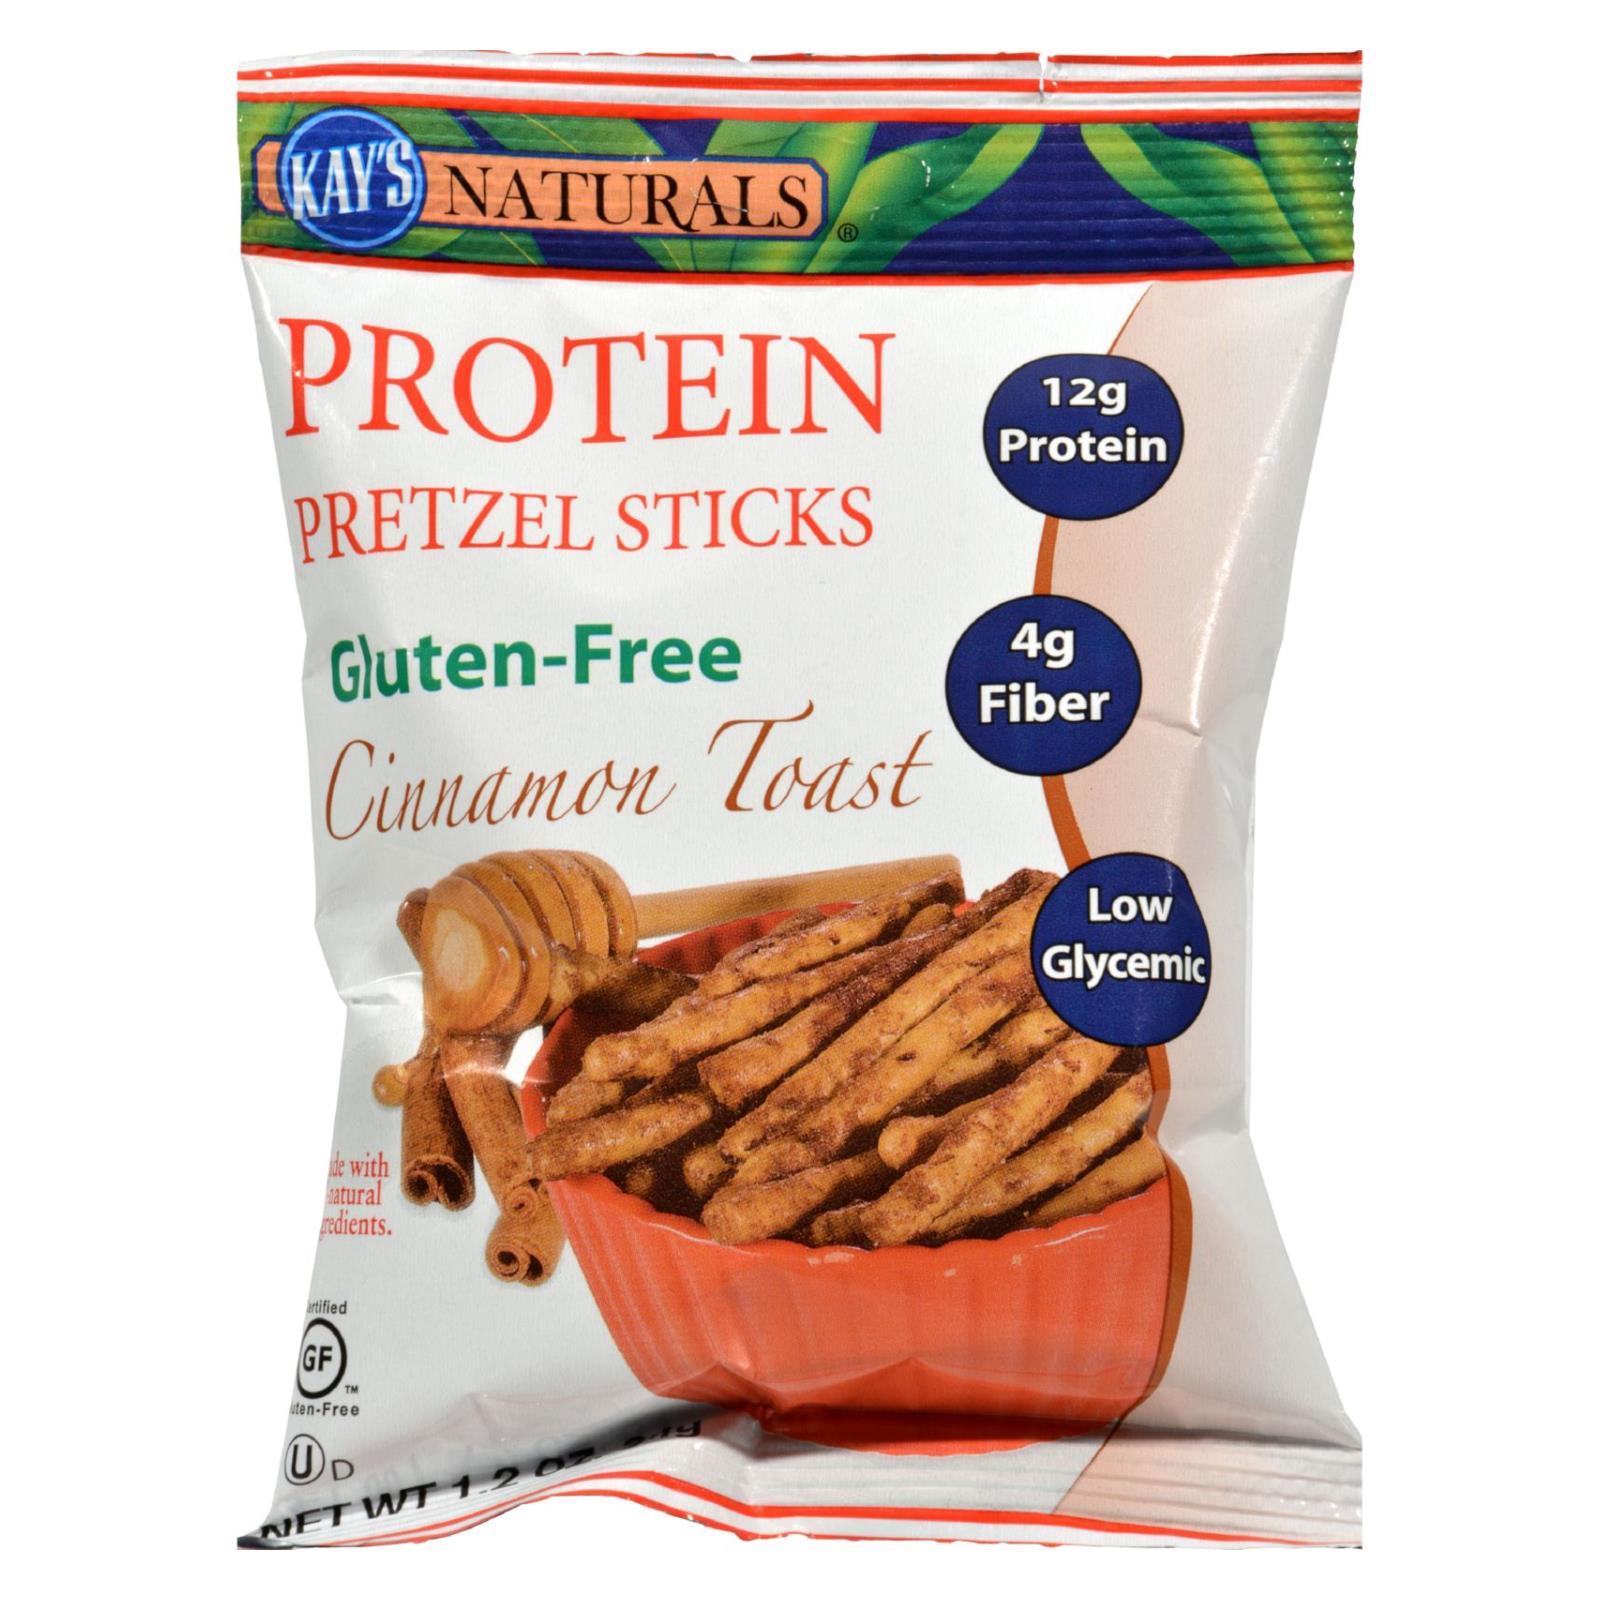 Kay'S Naturals, Kay's Naturals Protein Pretzel Sticks Cinnamon Toast - 1.2 oz - Case of 6 (Pack of 6)